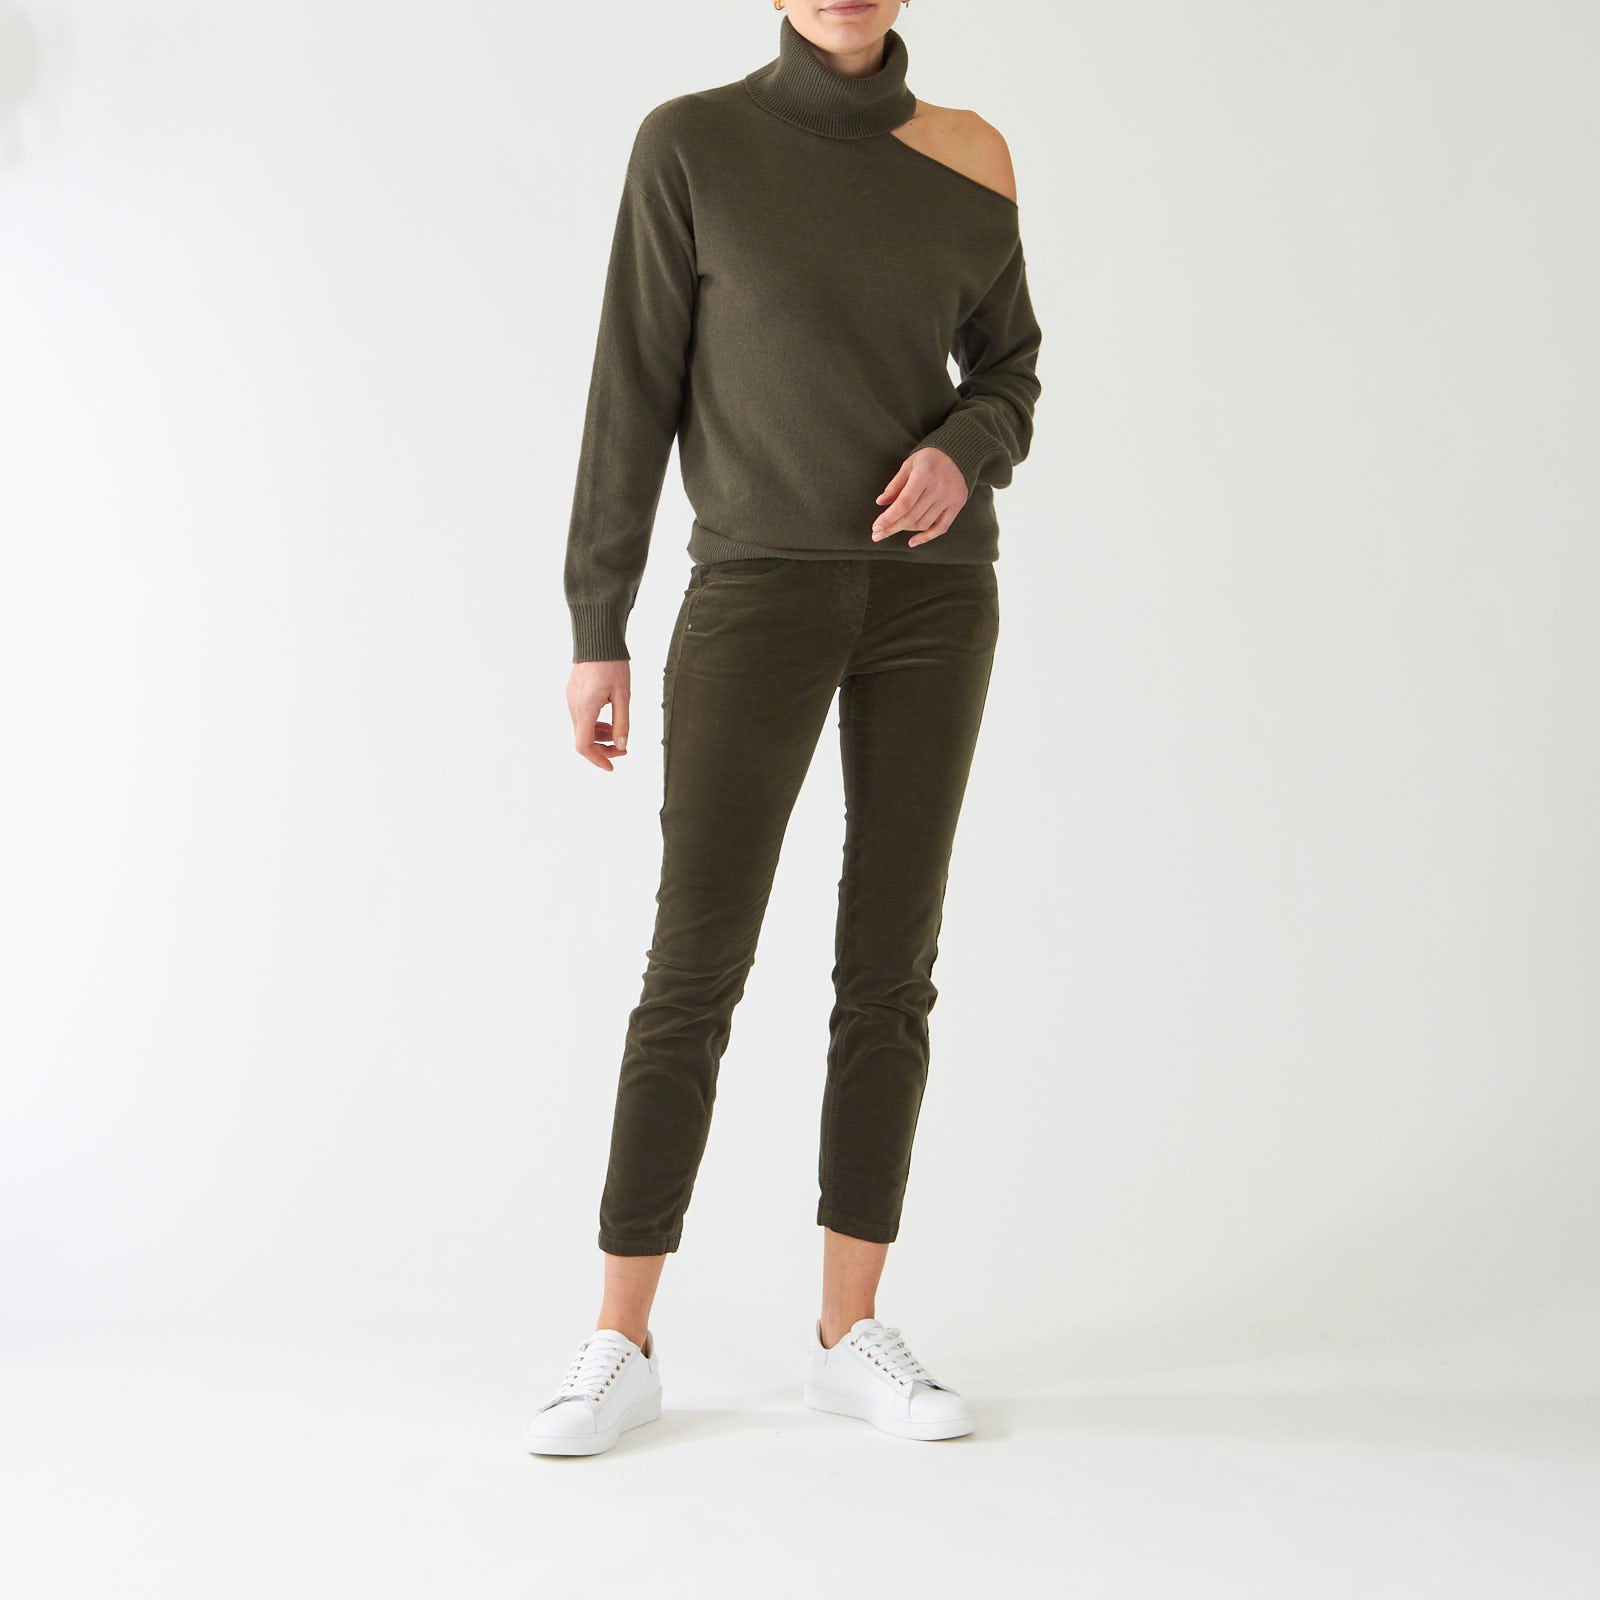 Greyish Khaki Cashmere Blend Cut-Out Sweater